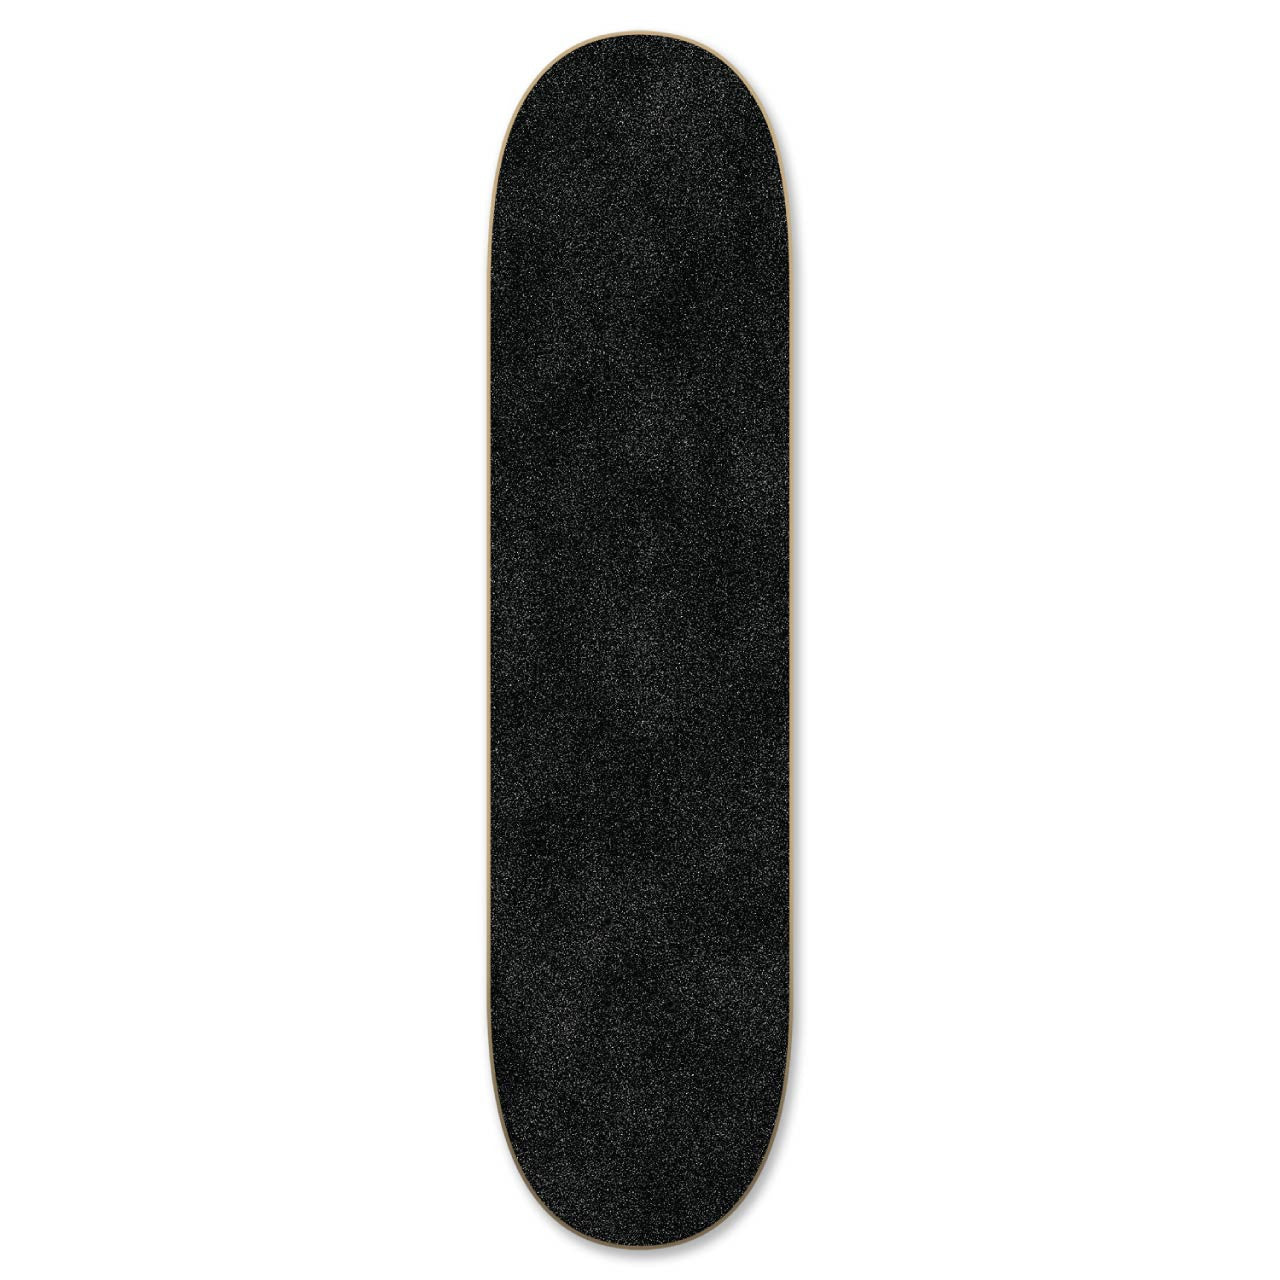 Graphic Dice Skateboard Deck